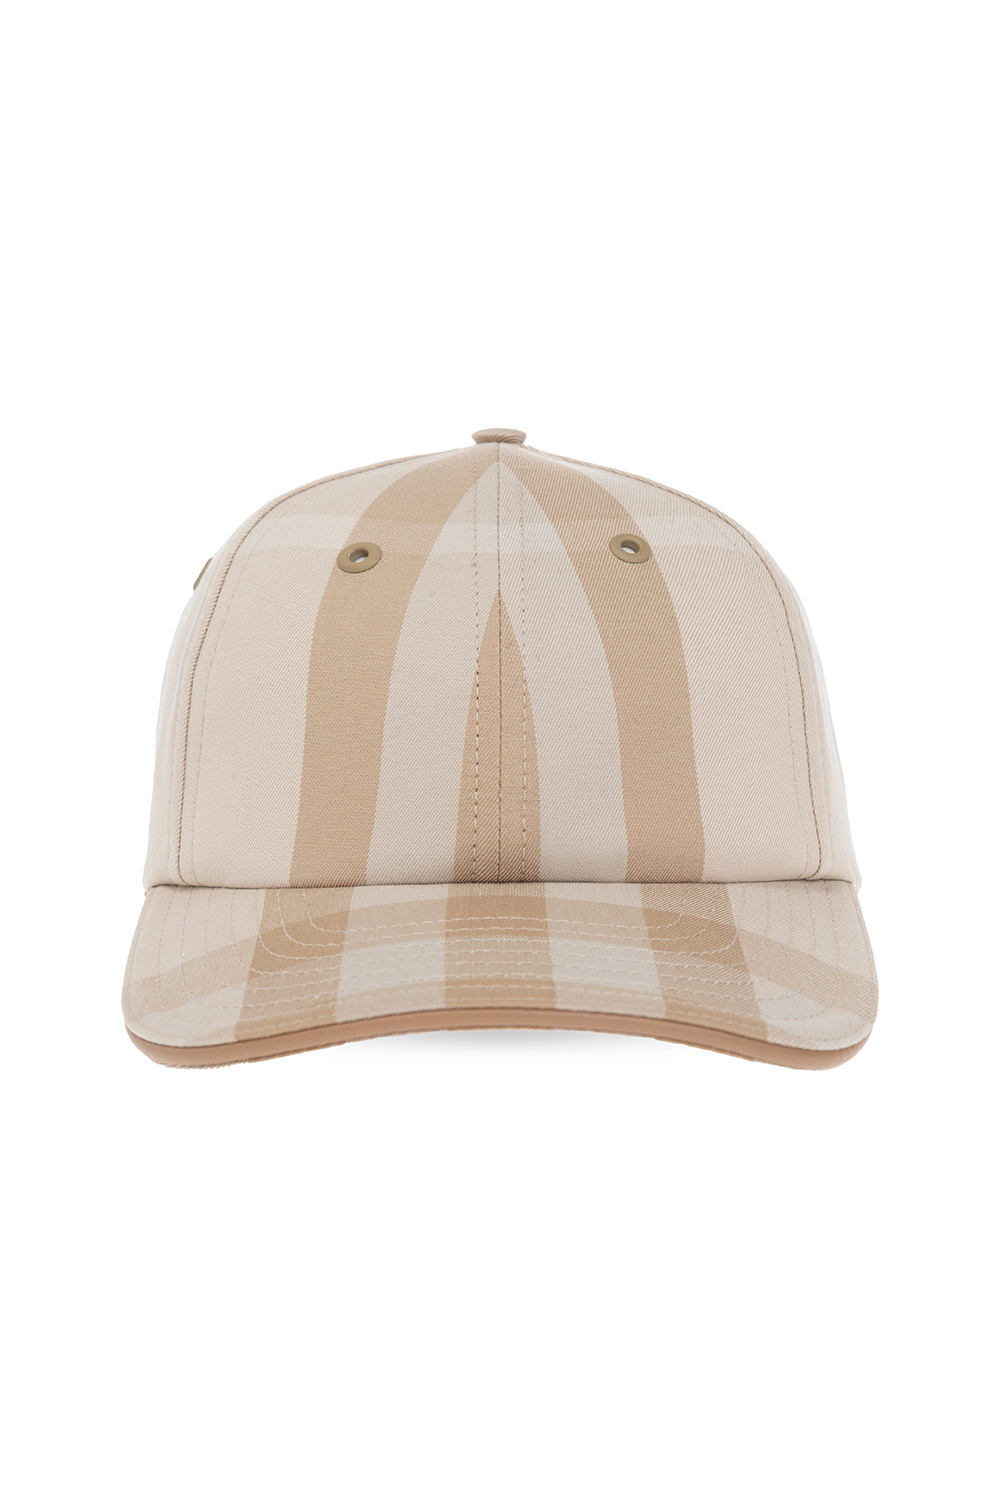 burberry Charm Baseball cap